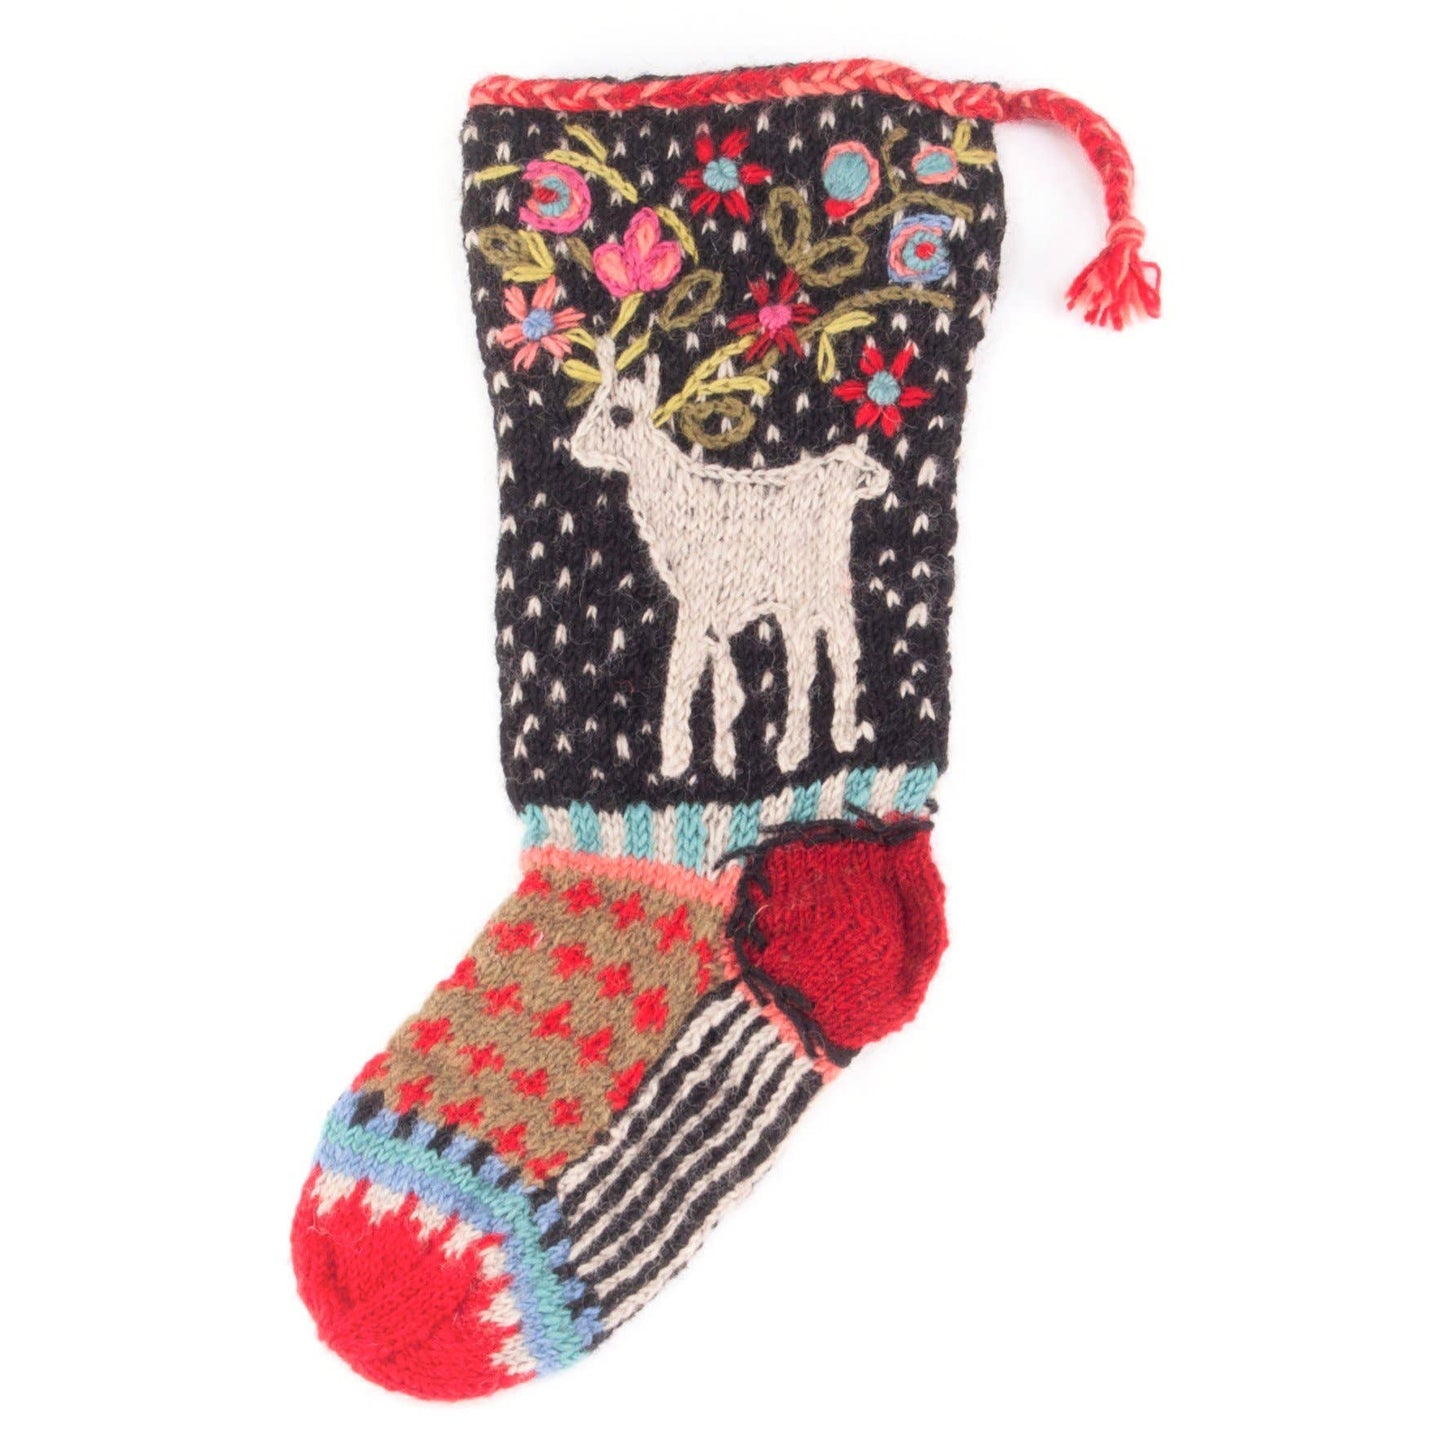 Reindeer - wool knit Christmas Stocking: Black